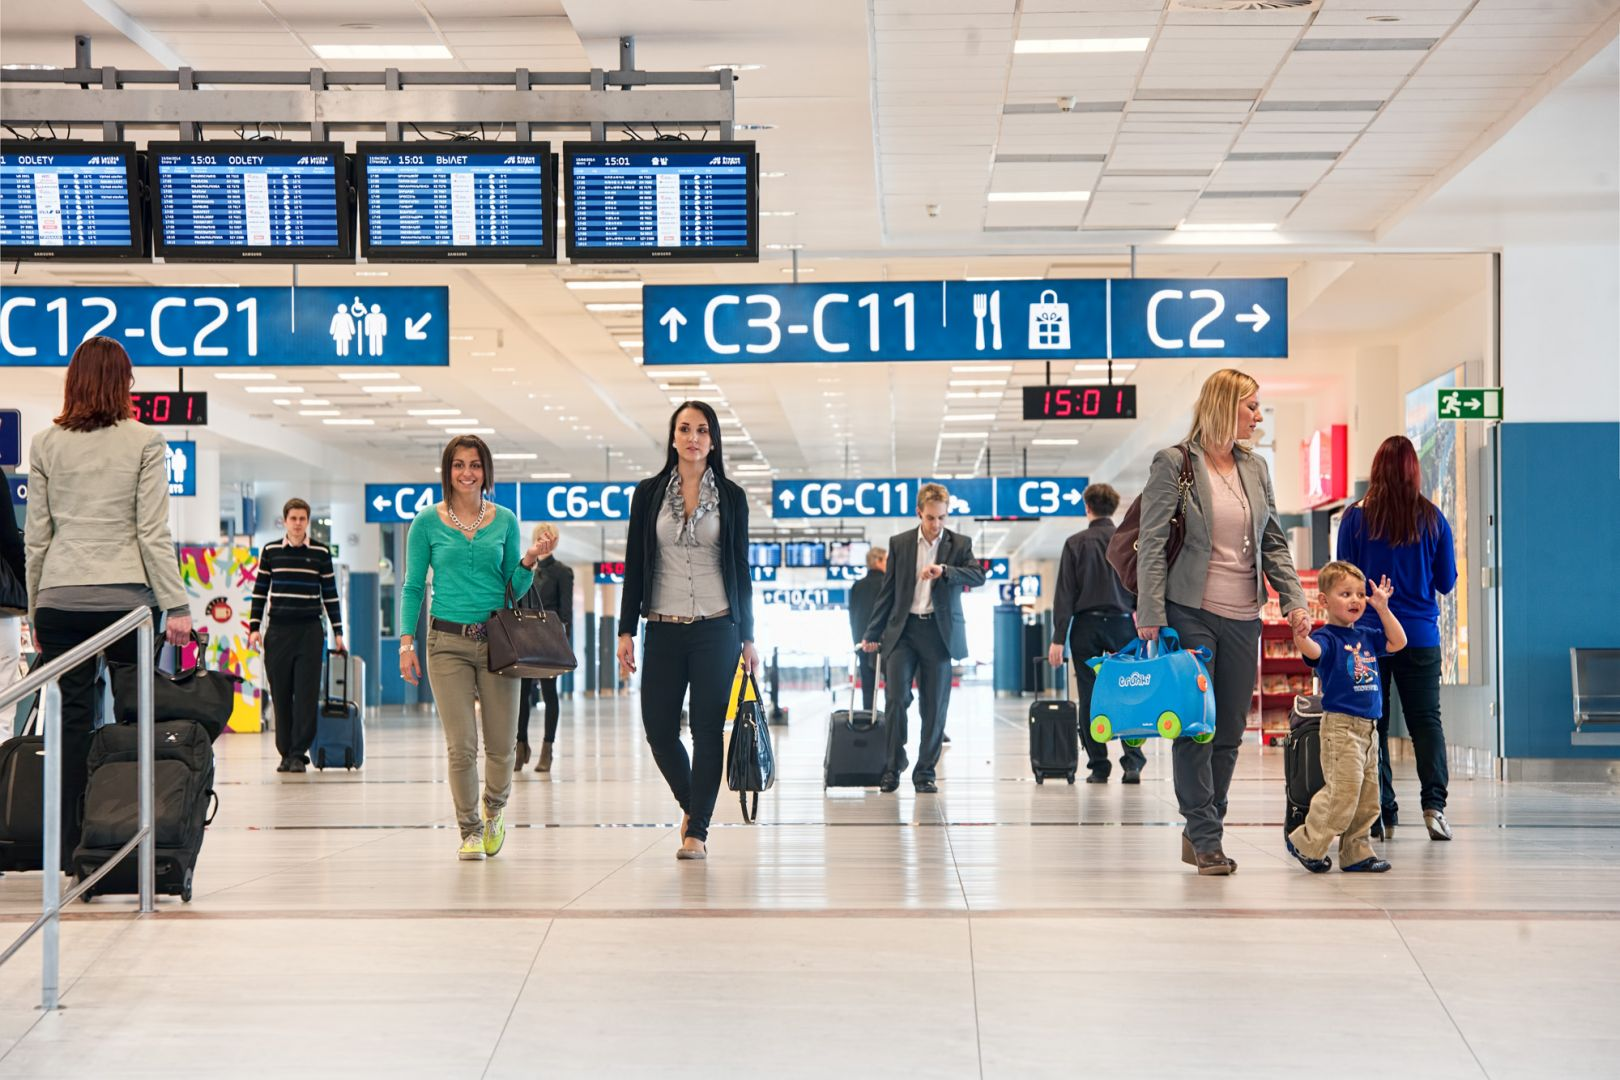 3 Flight APIs To Get Townsville Airport Data